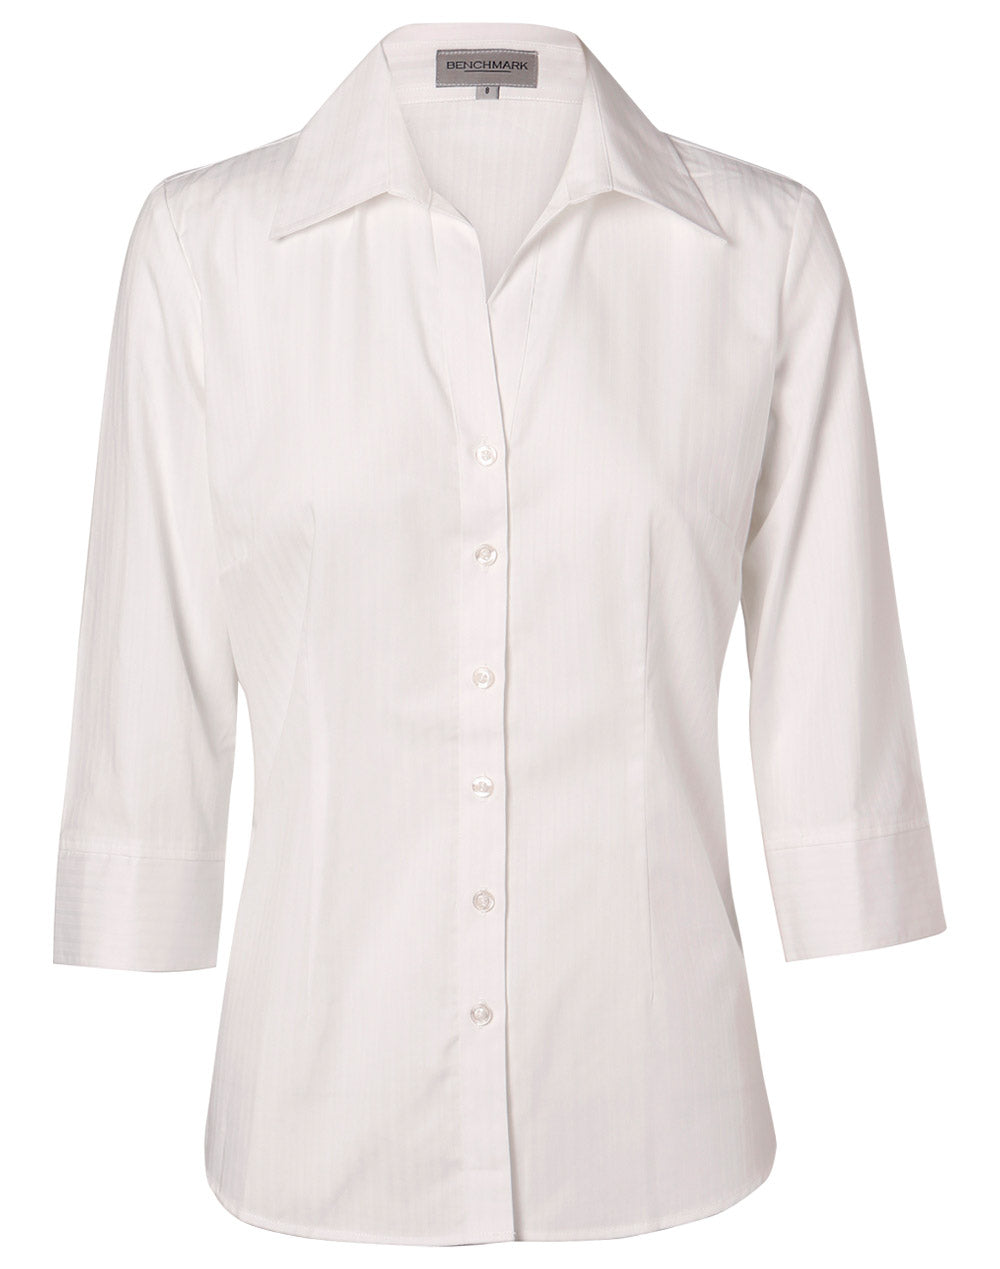 Winning Spirit Women's Self Stripe 3/4 Sleeve Shirt (M8100Q)